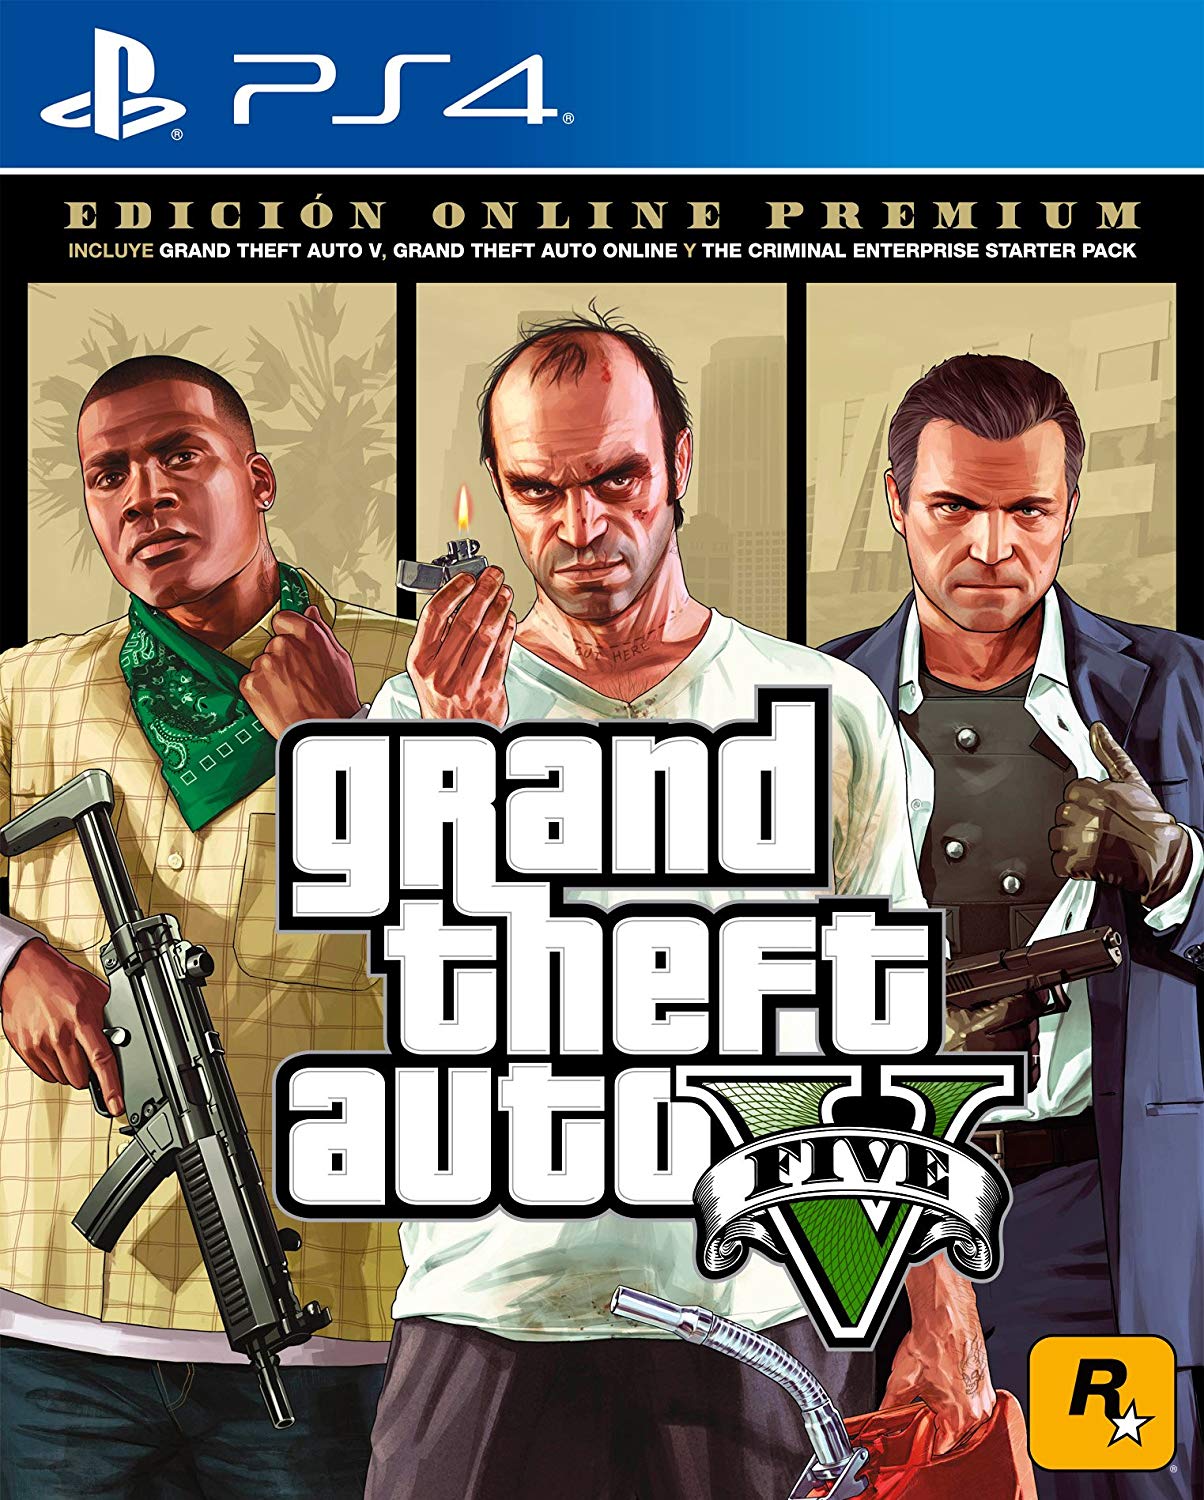 Grand Theft Auto 5 Premium Online Edition